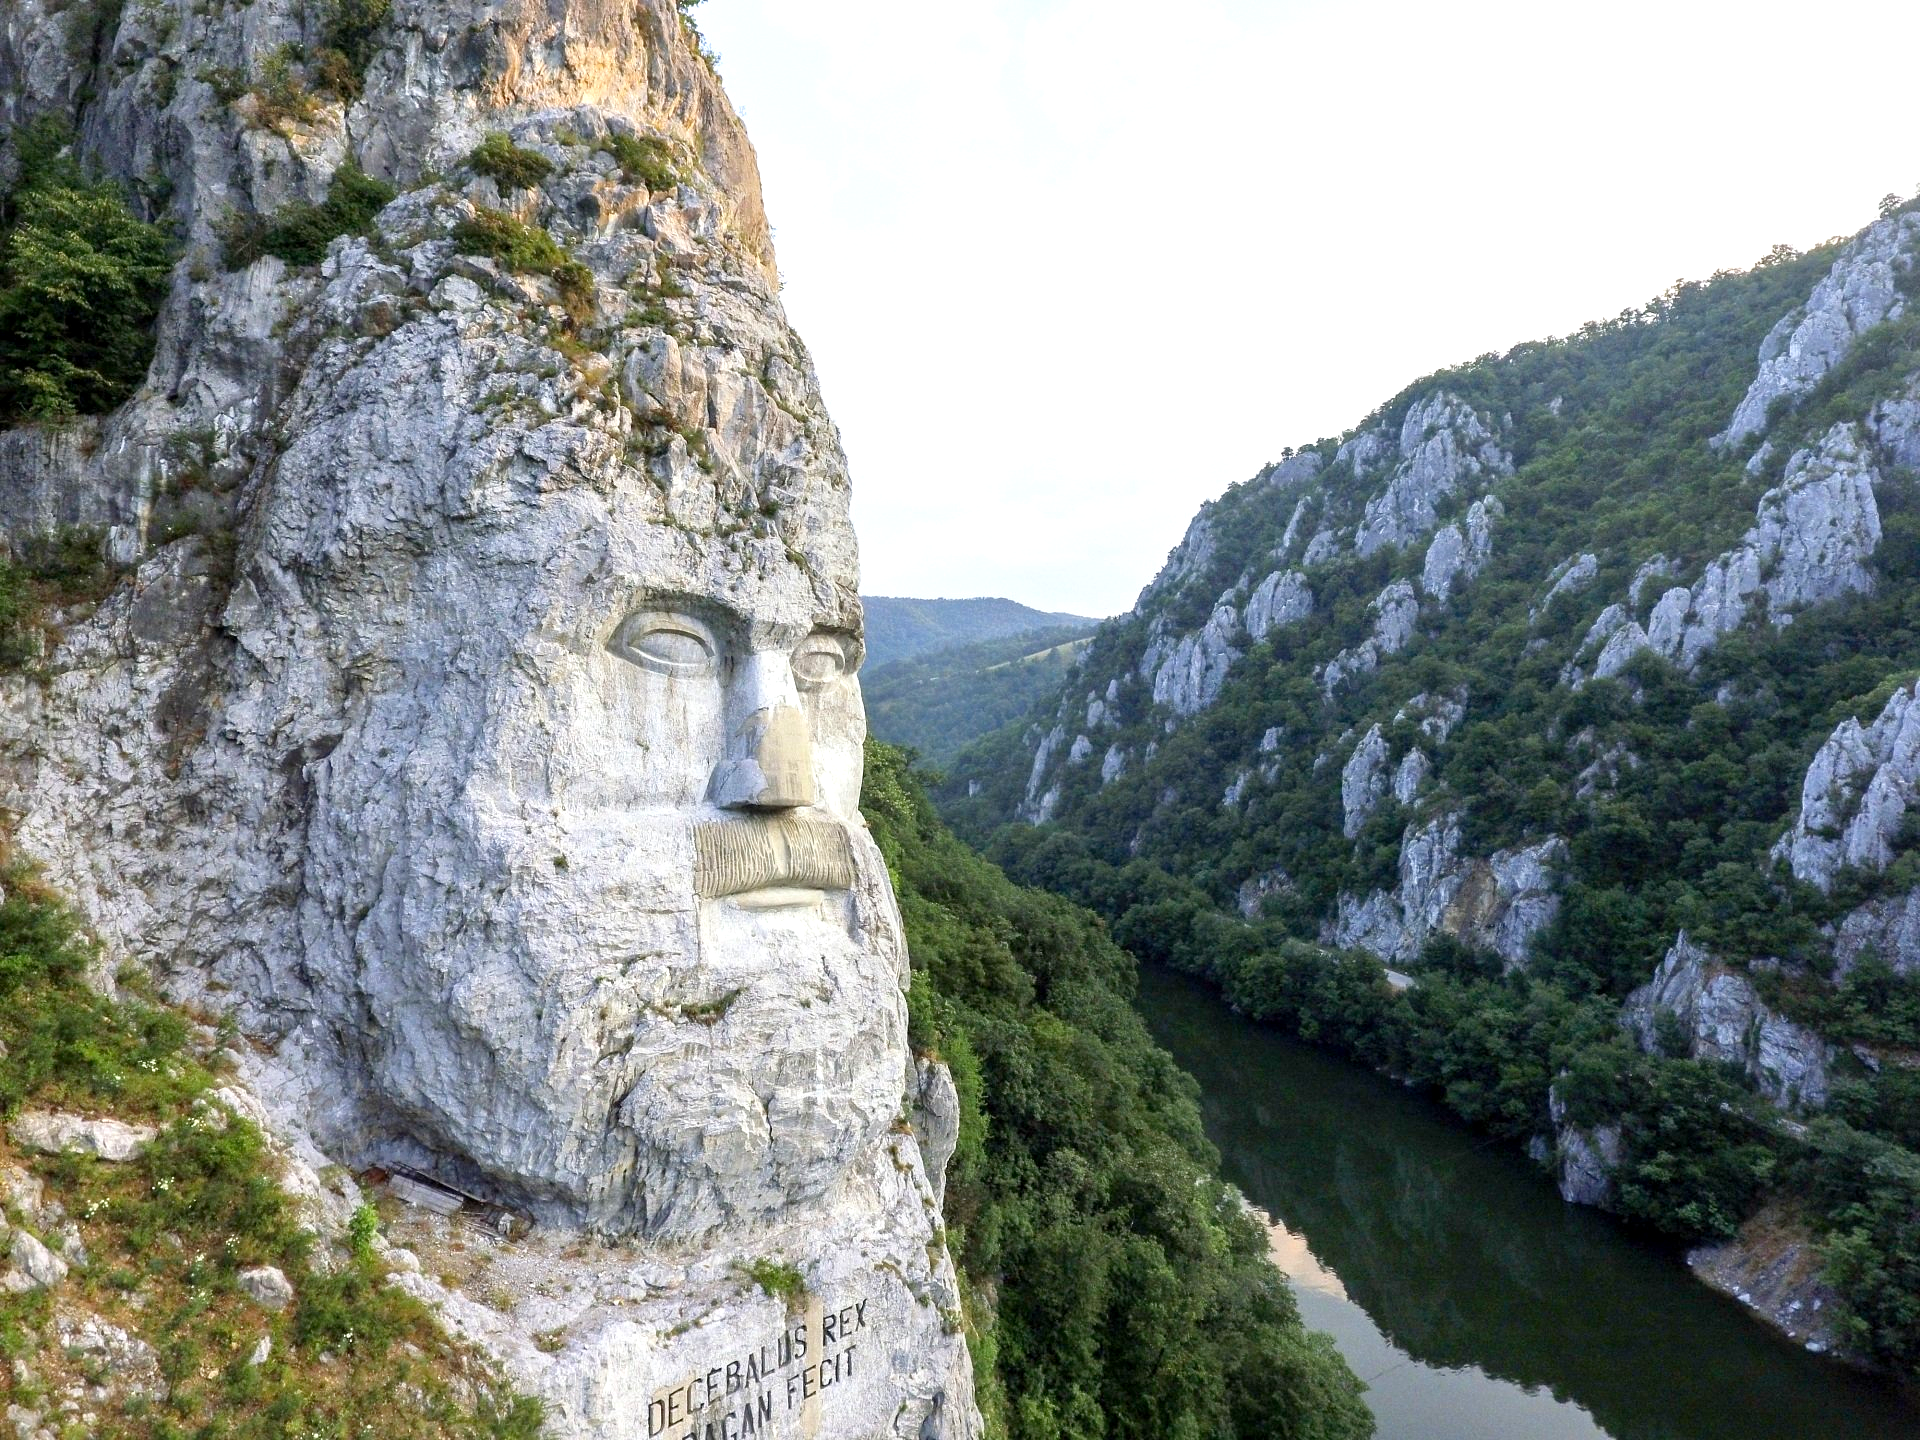 
Largest rock sculpture on a river bank: The rock sculpture of Decebalus